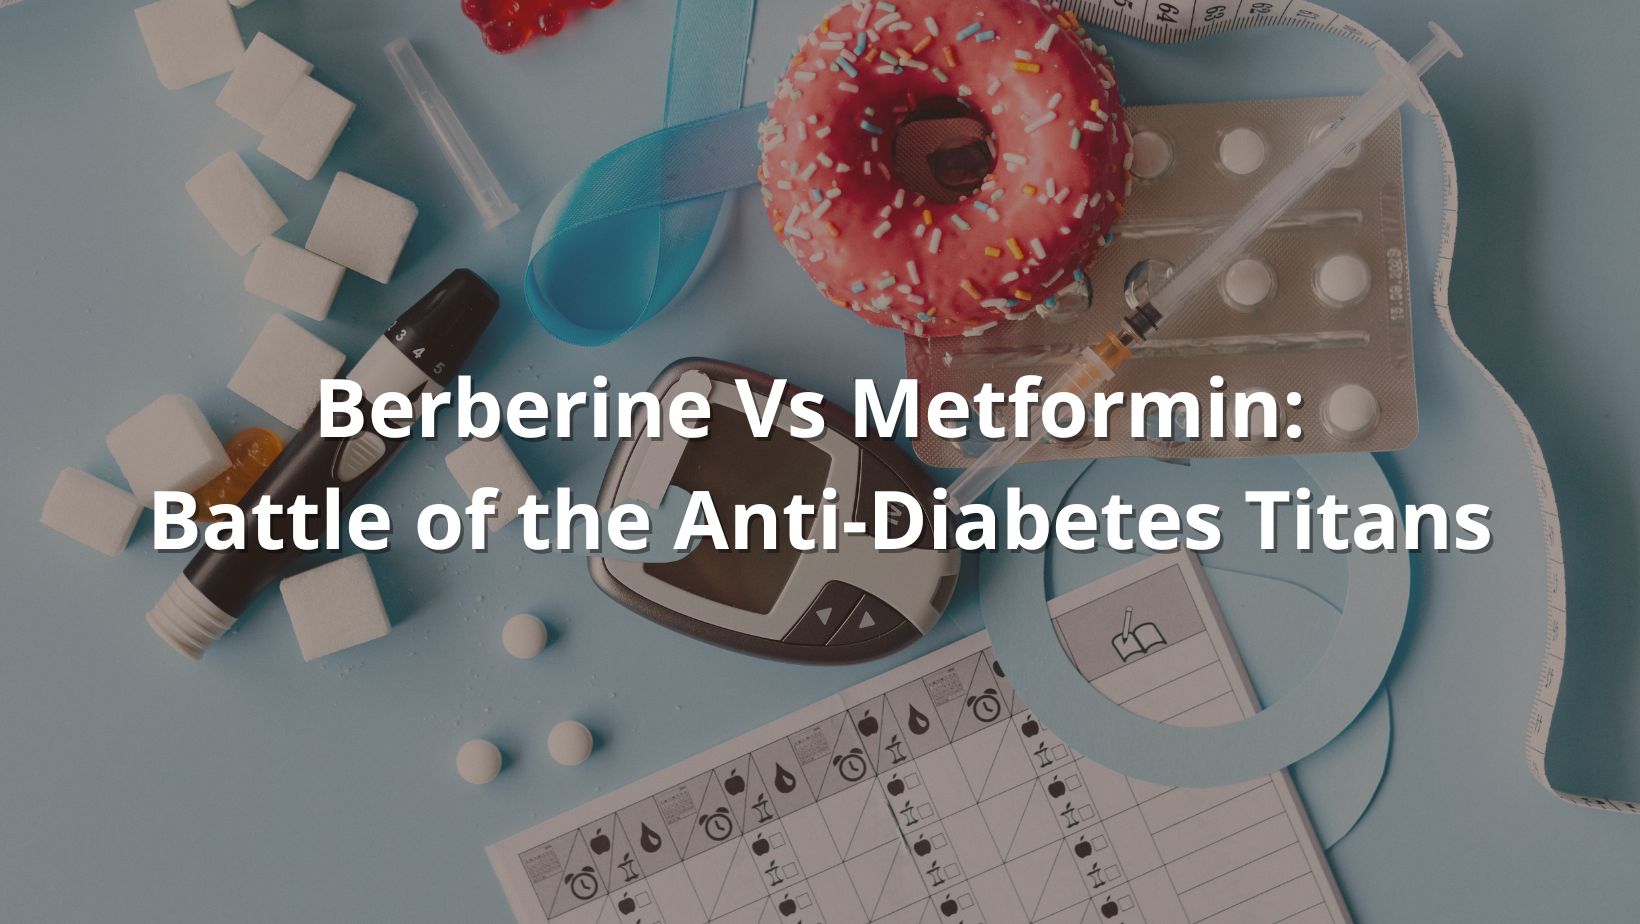 Berberine vs metformin featured image